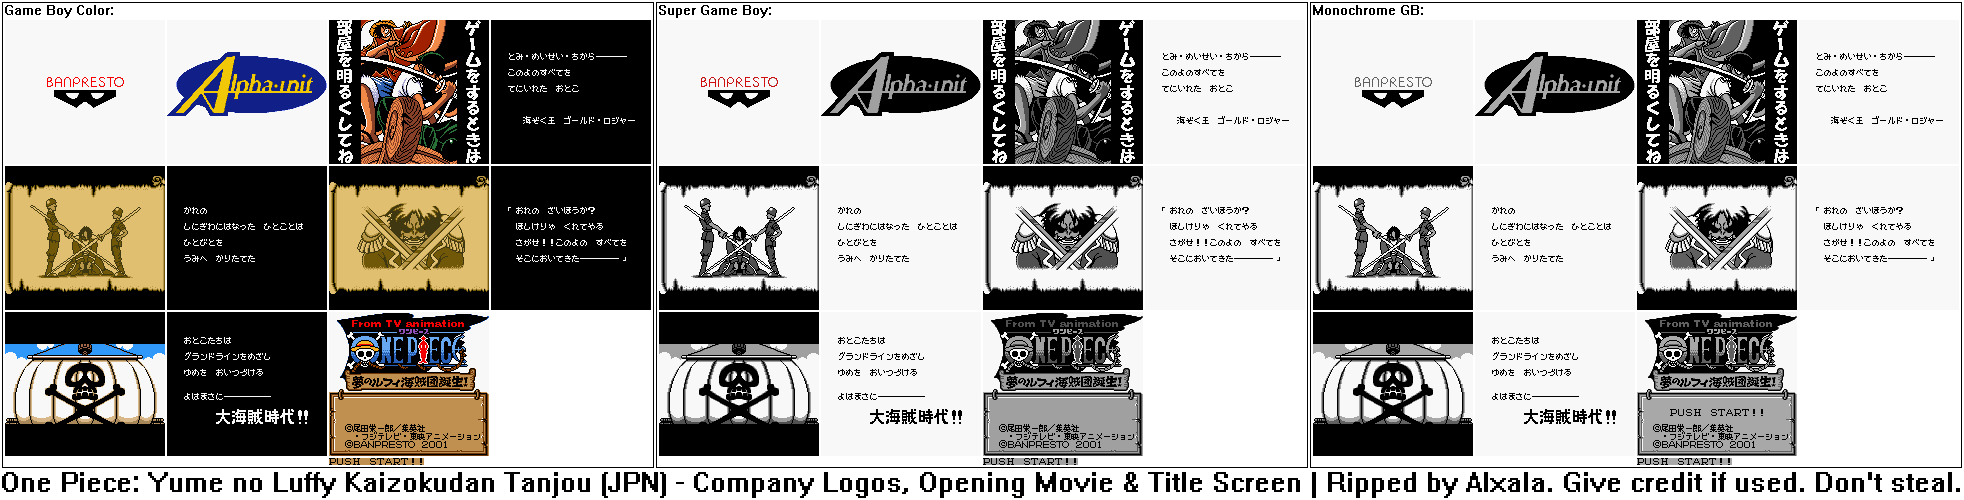 One Piece: Yume no Luffy Kaizokudan Tanjou (JPN) - Company Logos, Opening Movie & Title Screen